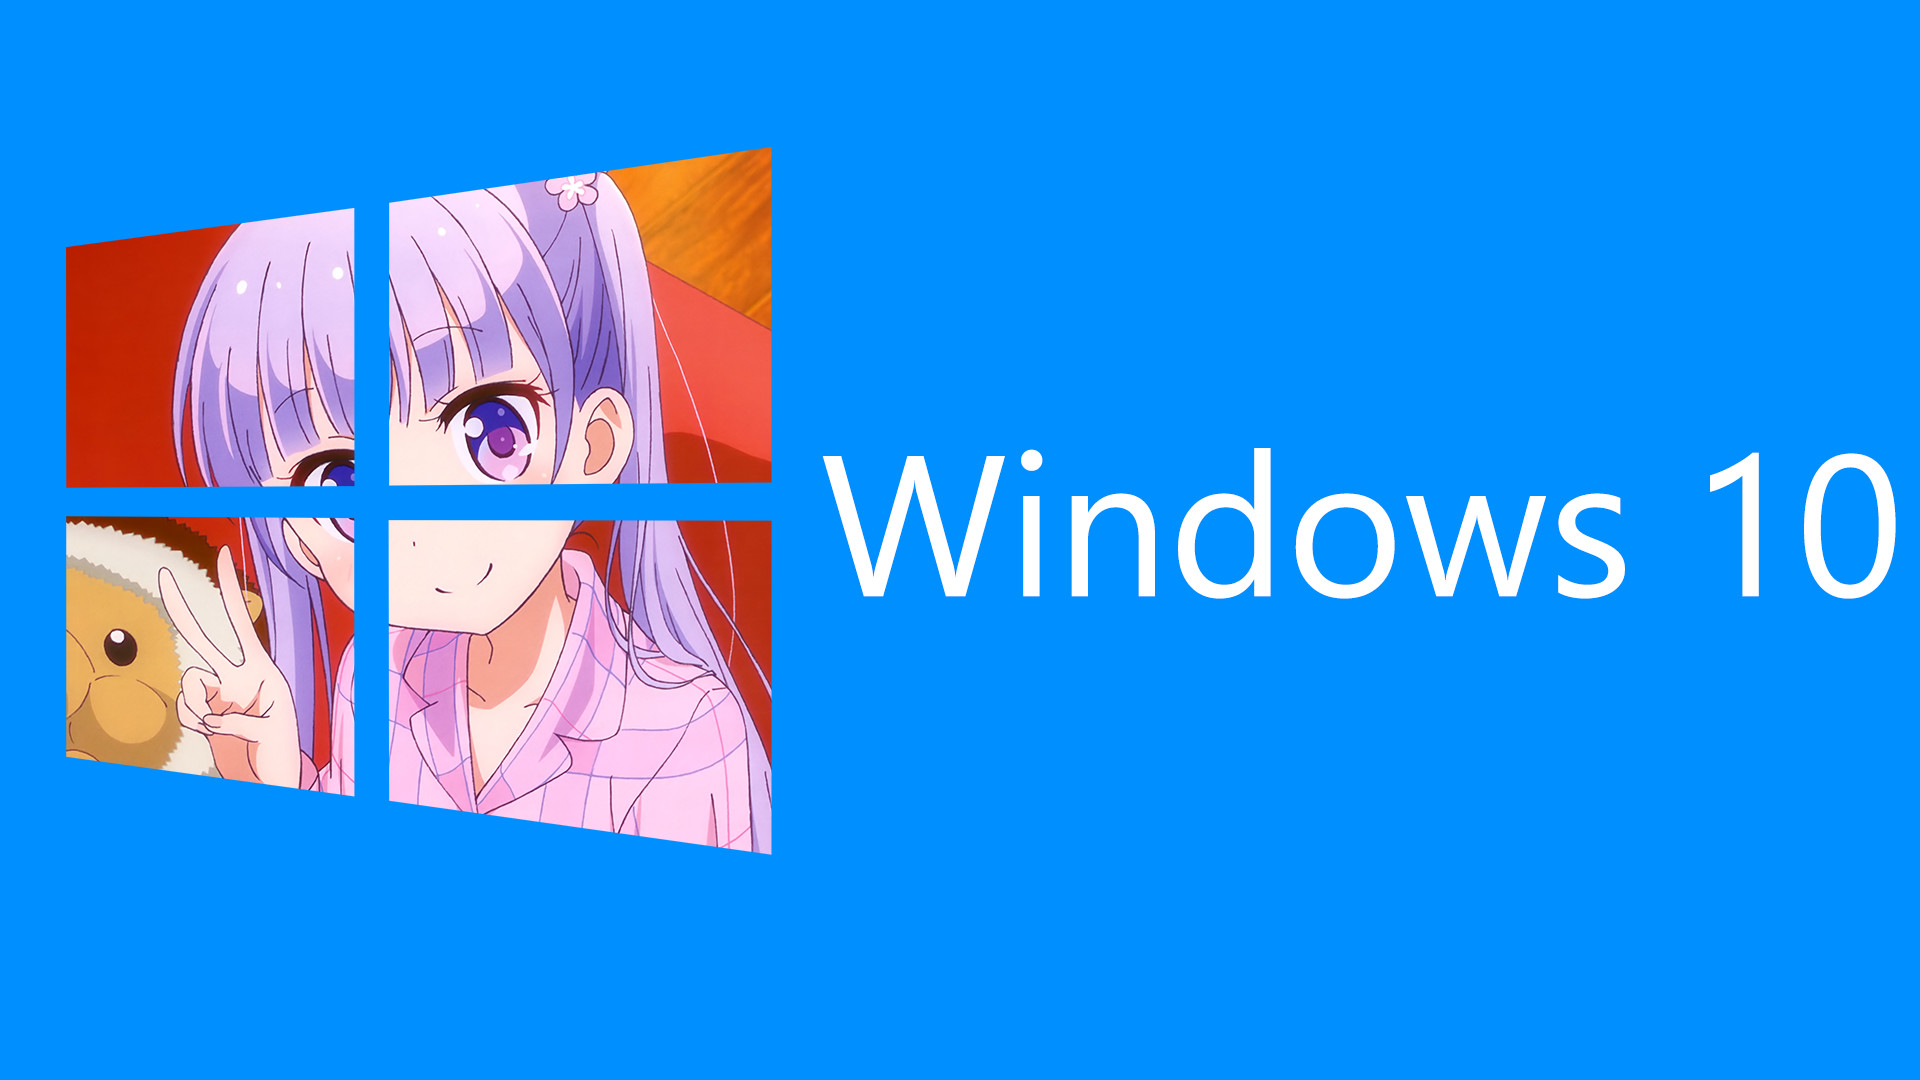 windows xp anime style by BridgetDeathChild on DeviantArt